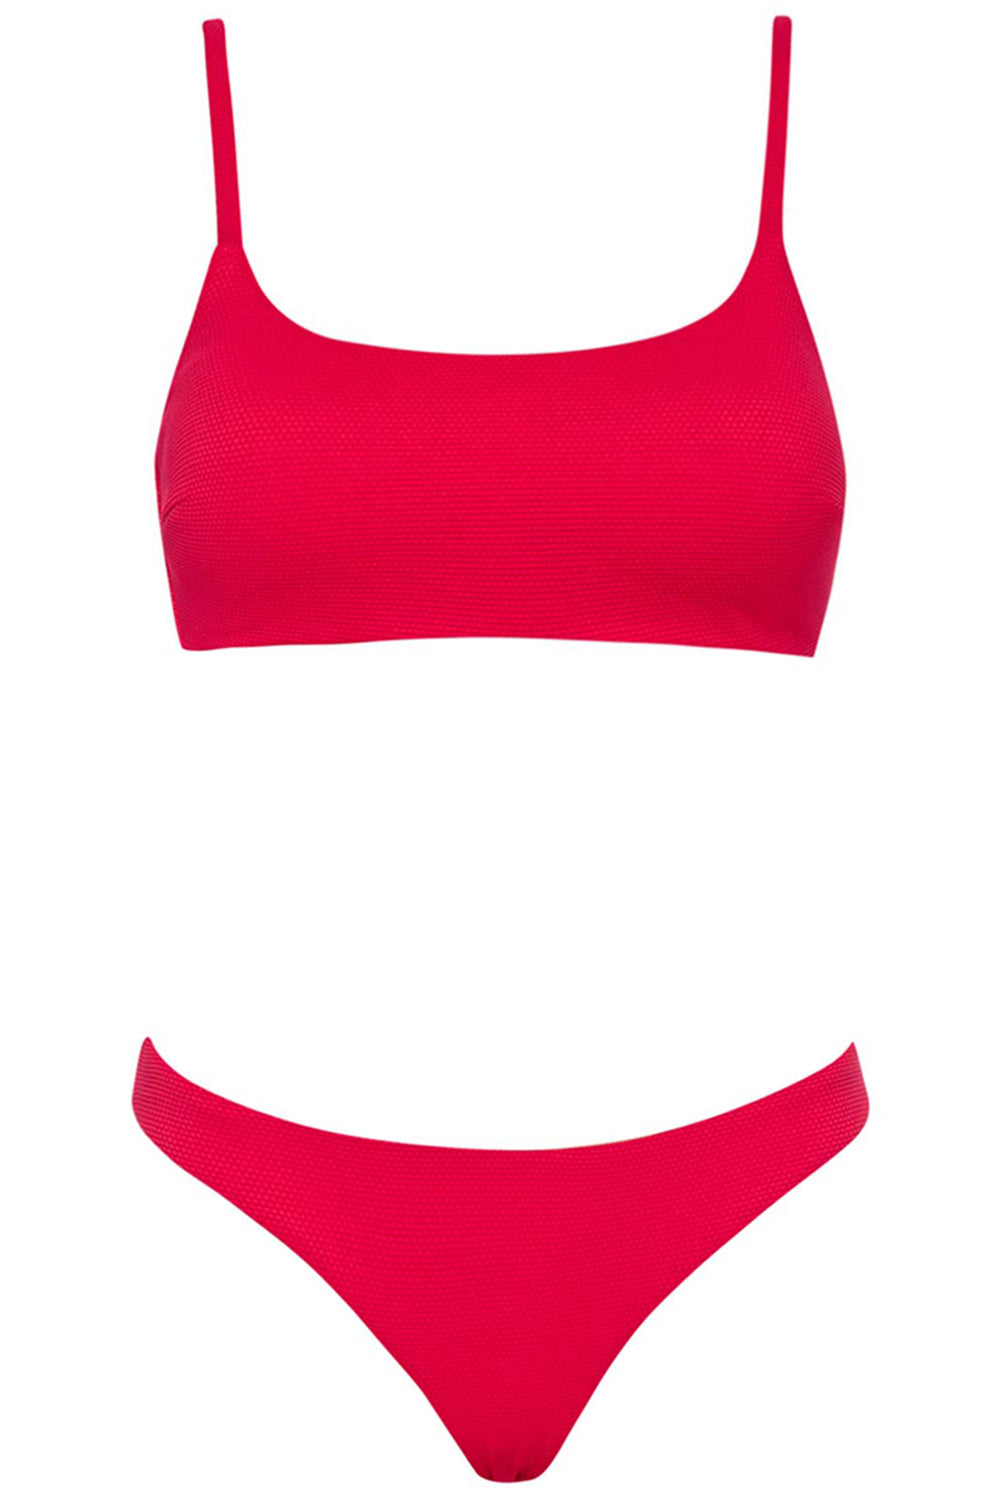 Malibu Bikini Red Set on white background front view.